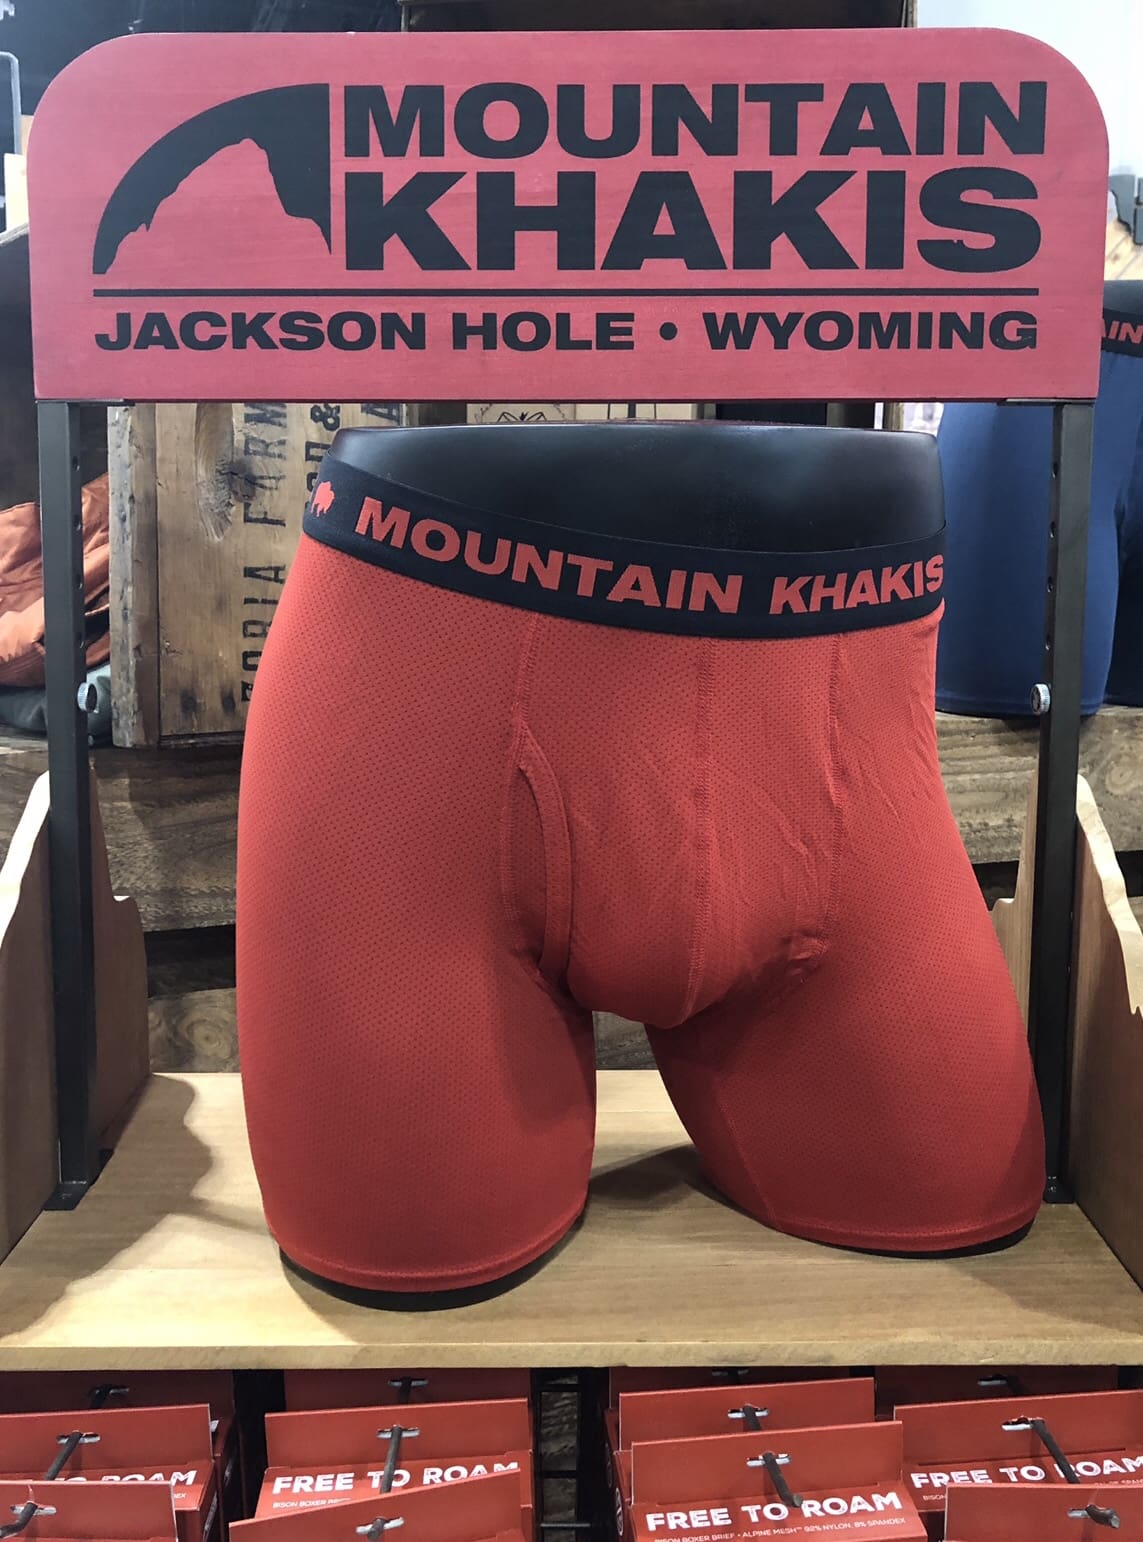 ORWM 18 - Mountain Khakis Introducing Underwear